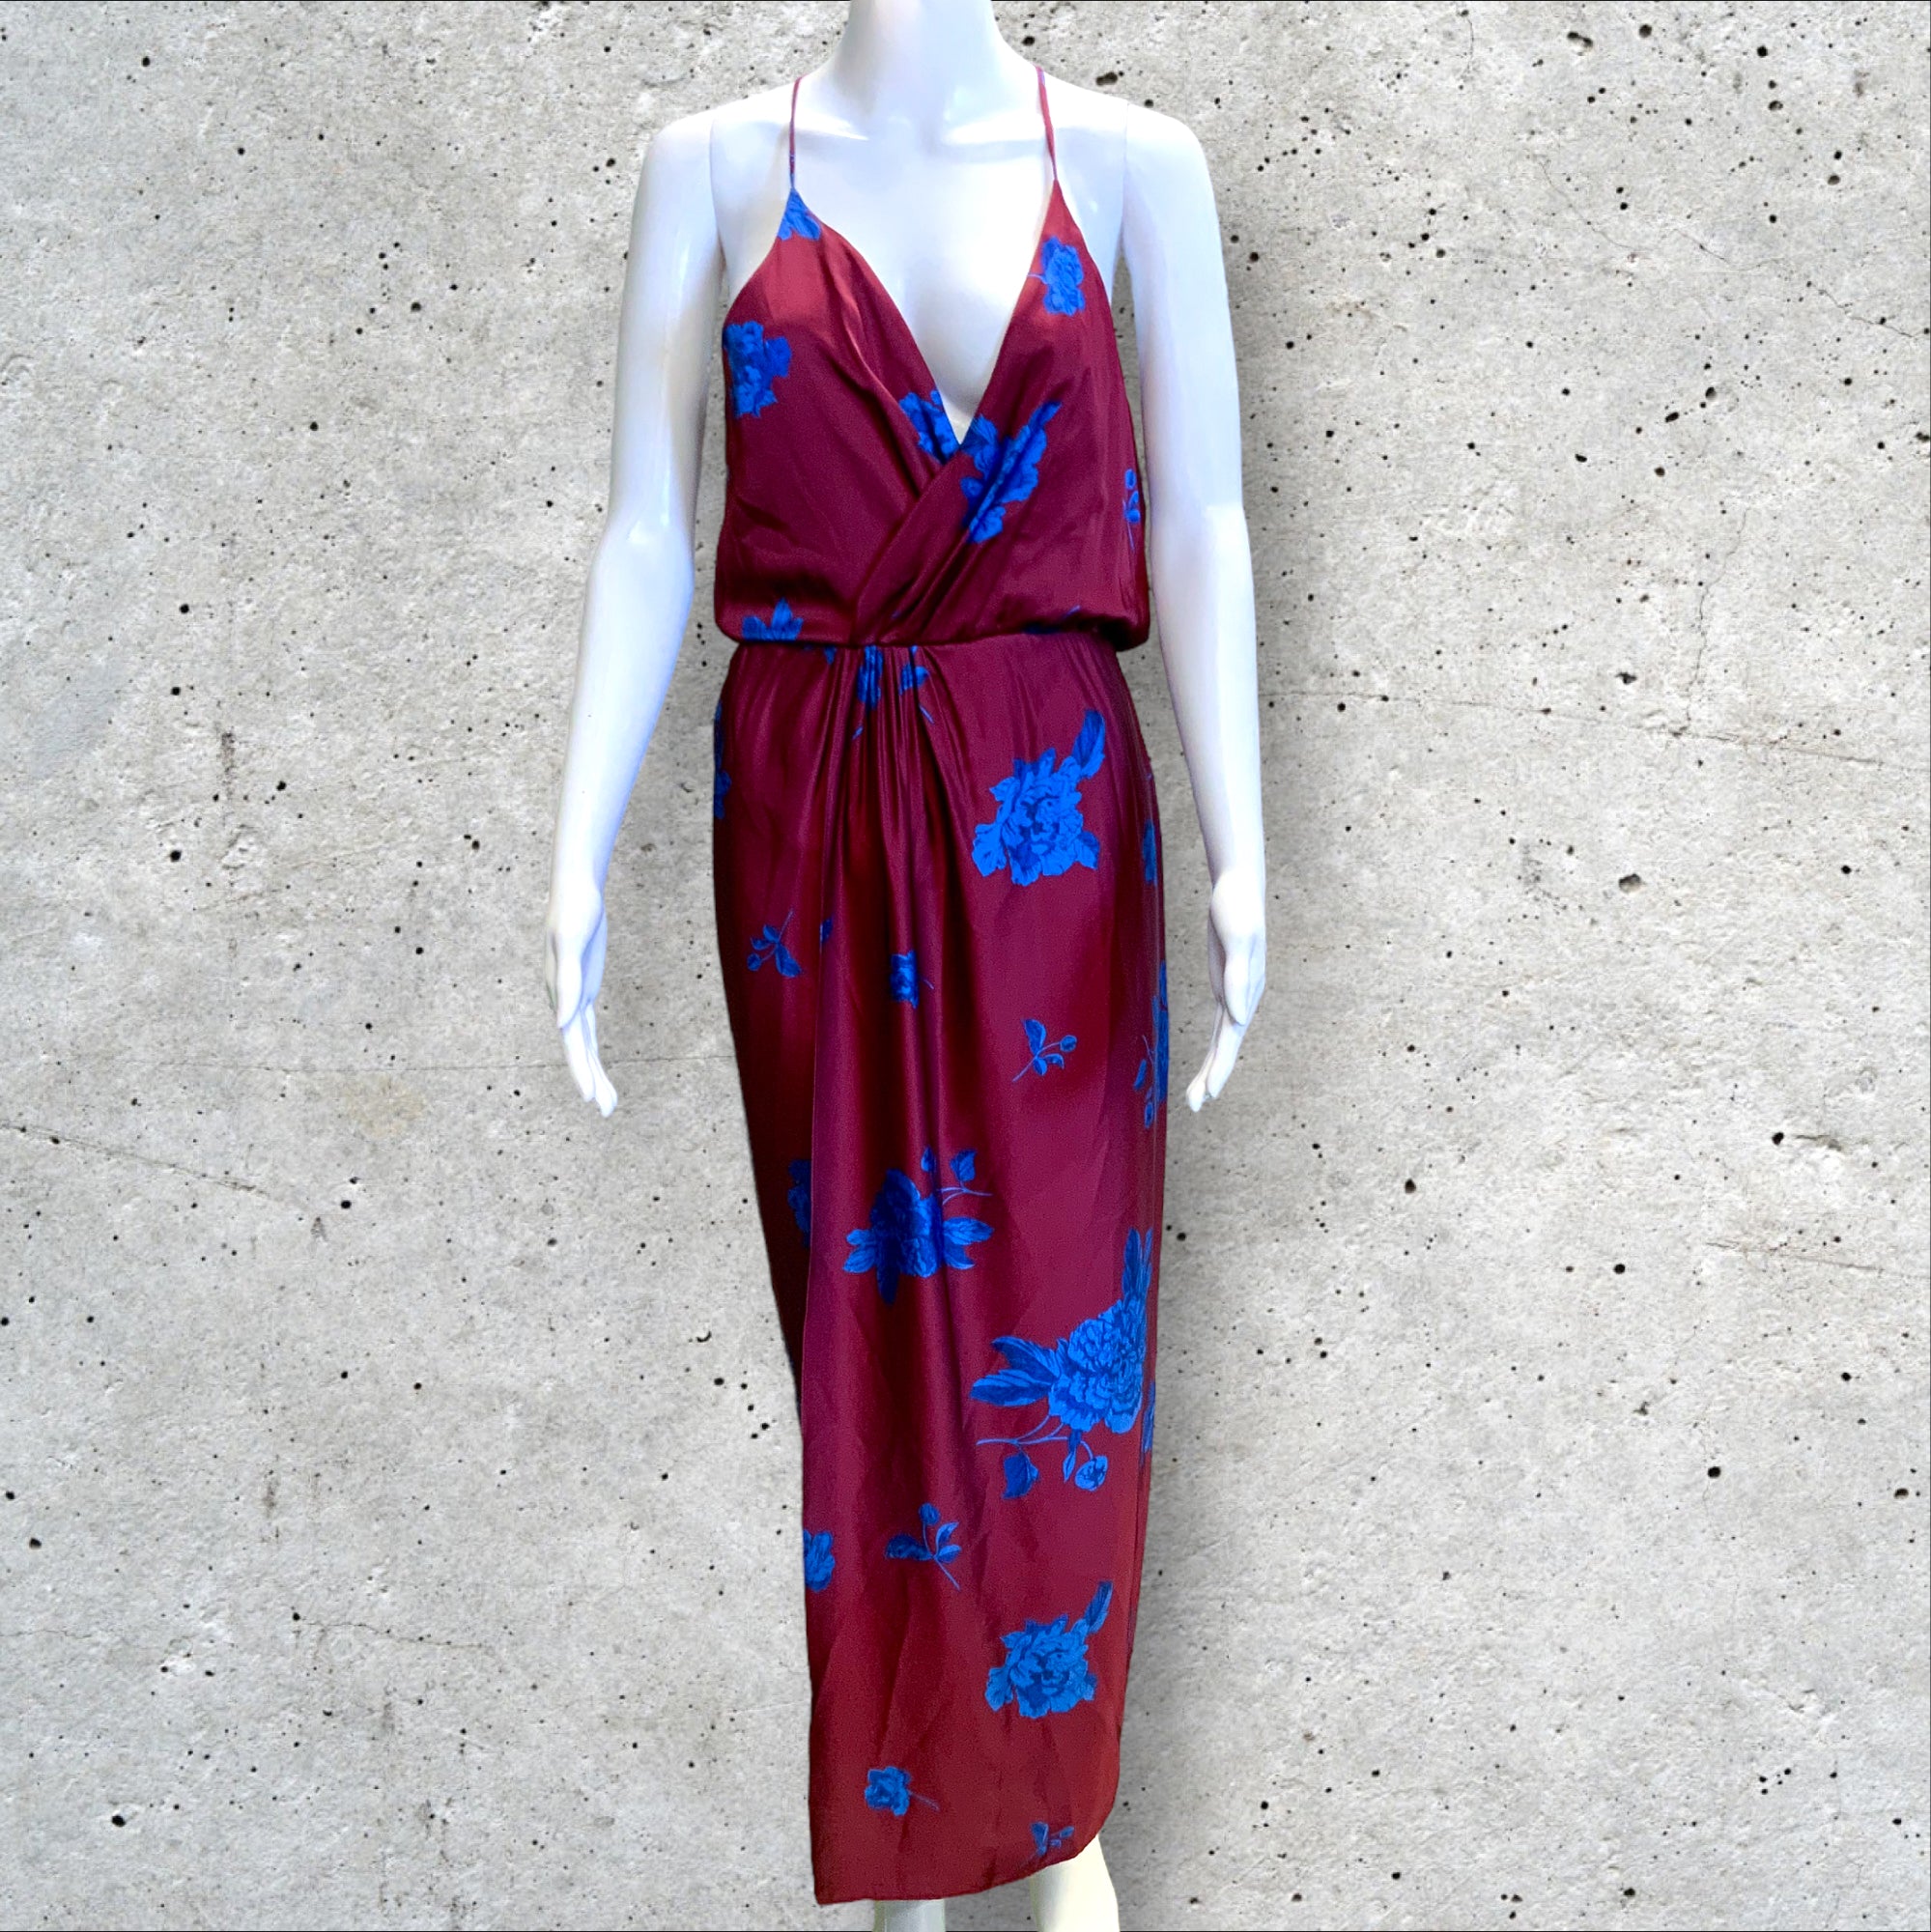 SHEIKE Stunning Burgundy & Blue Satin Floral Cocktail/Party Midi Dress - Size 12